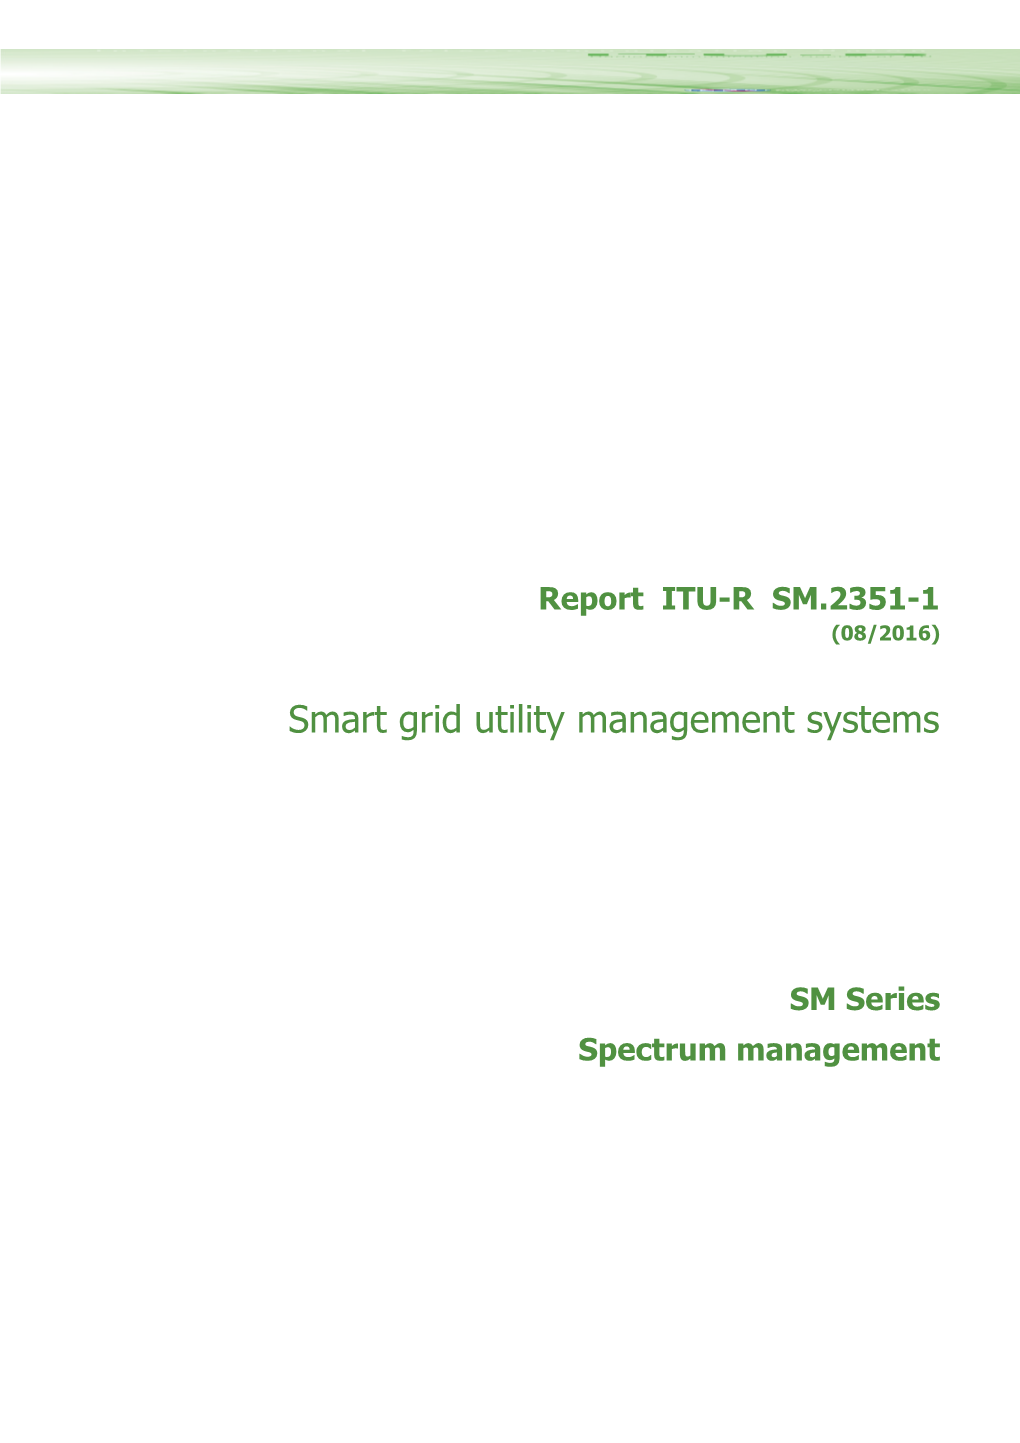 REPORT ITU-R SM.2351-1 - Smart Grid Utility Management Systems